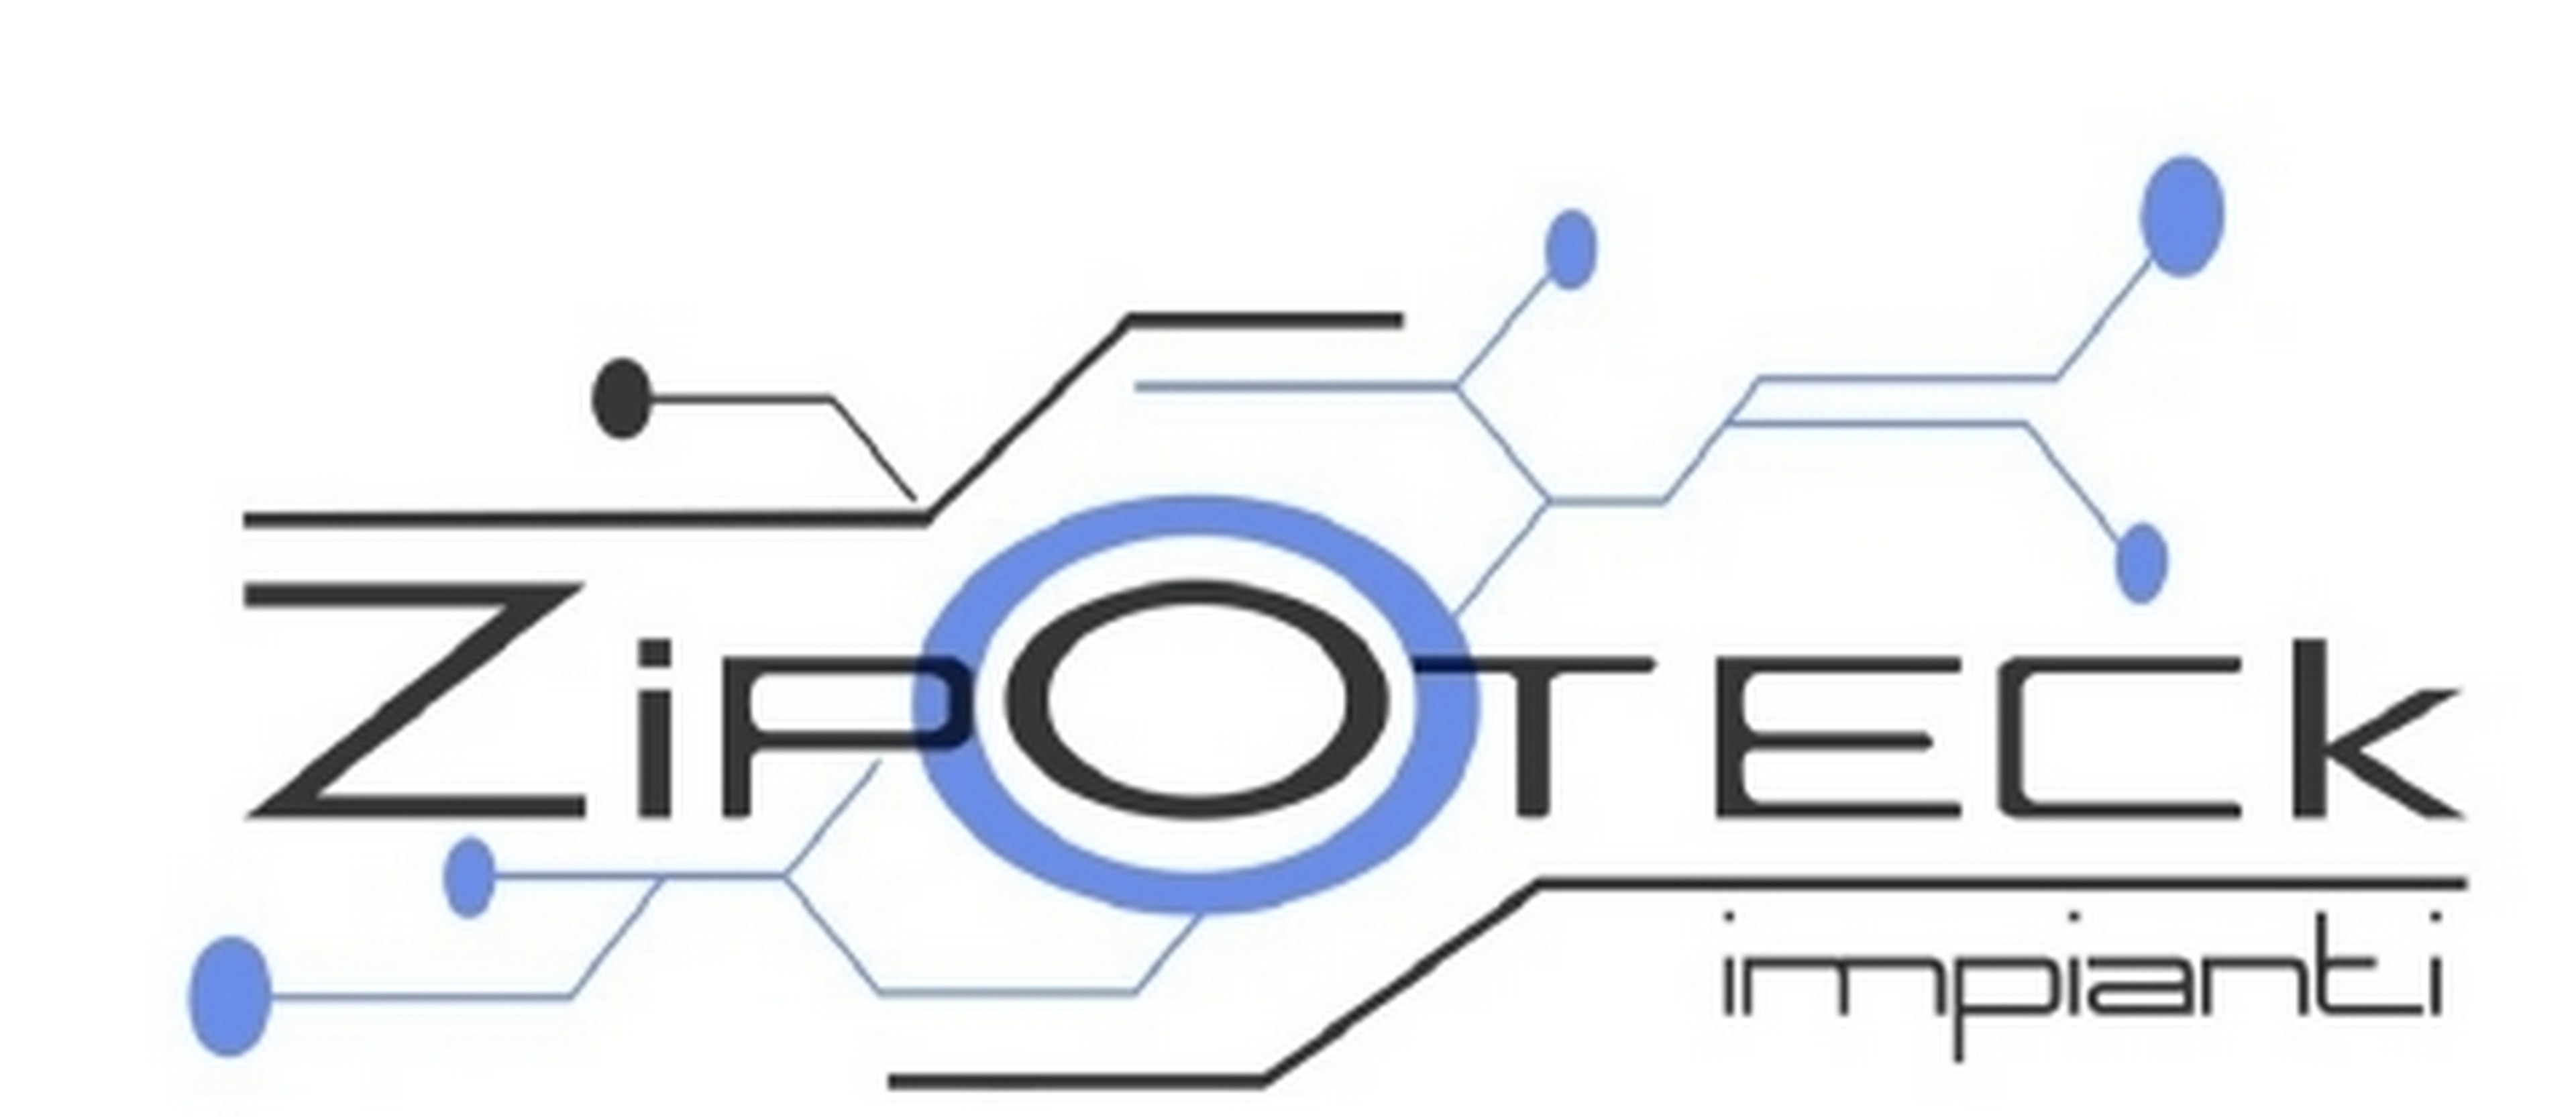 foto logo partner Zipoteck impianti elettrici